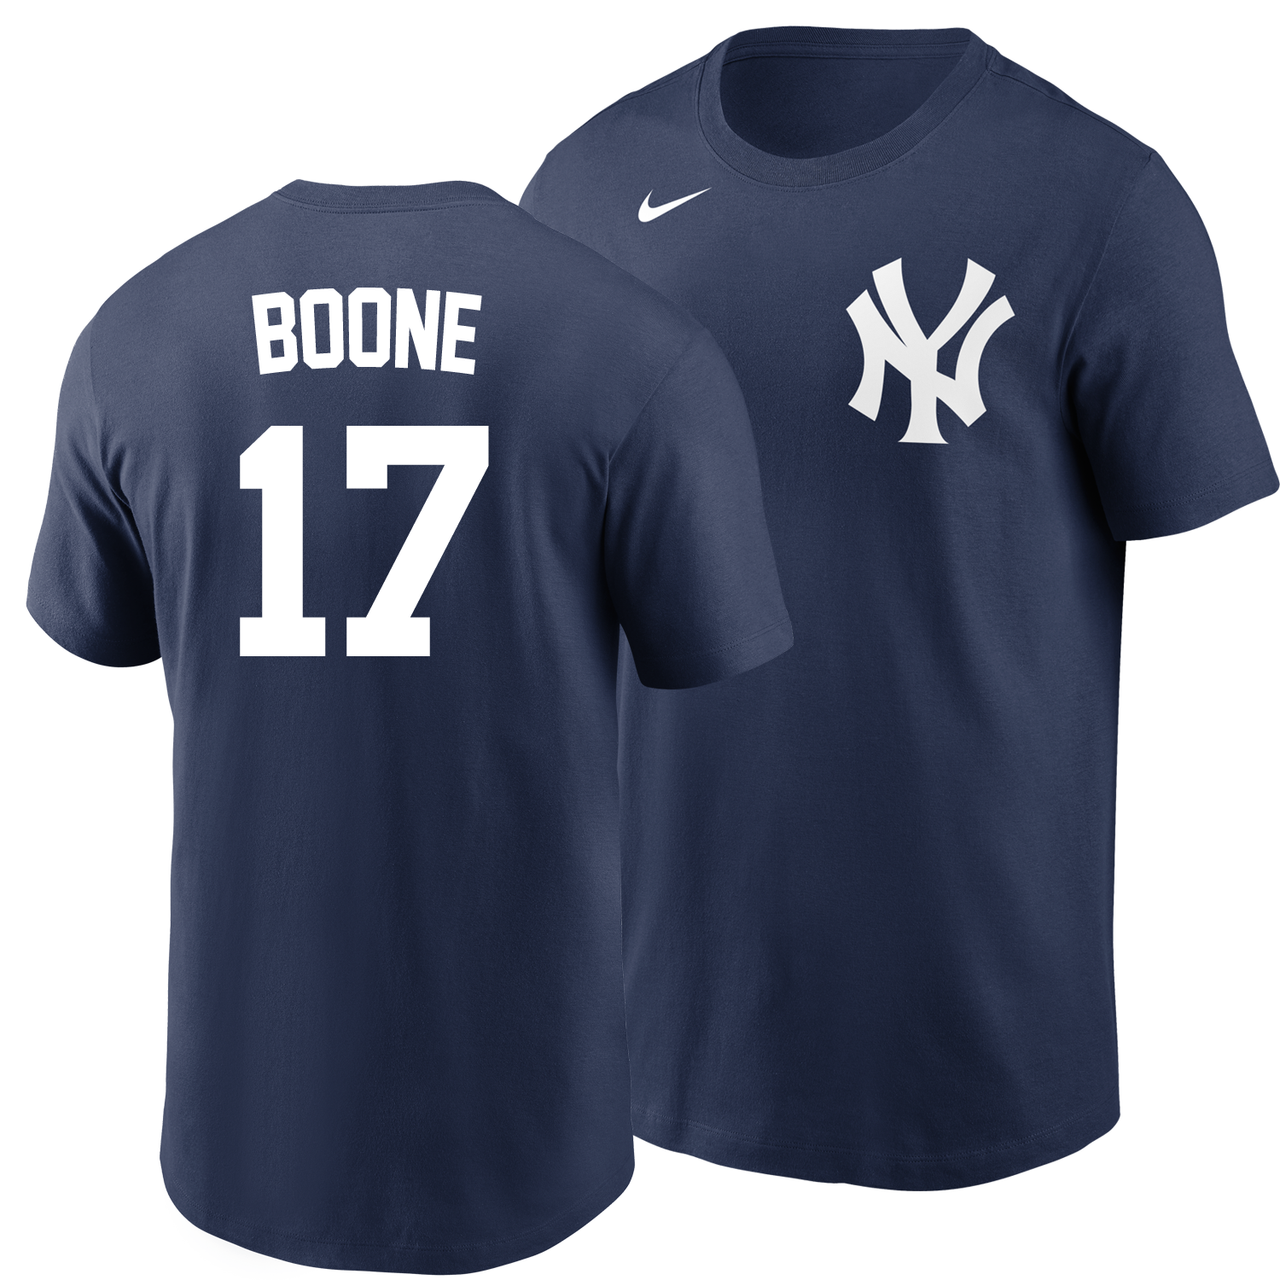 Aaron Boone Youth T-Shirt - Navy NY Yankees Kids T-Shirt